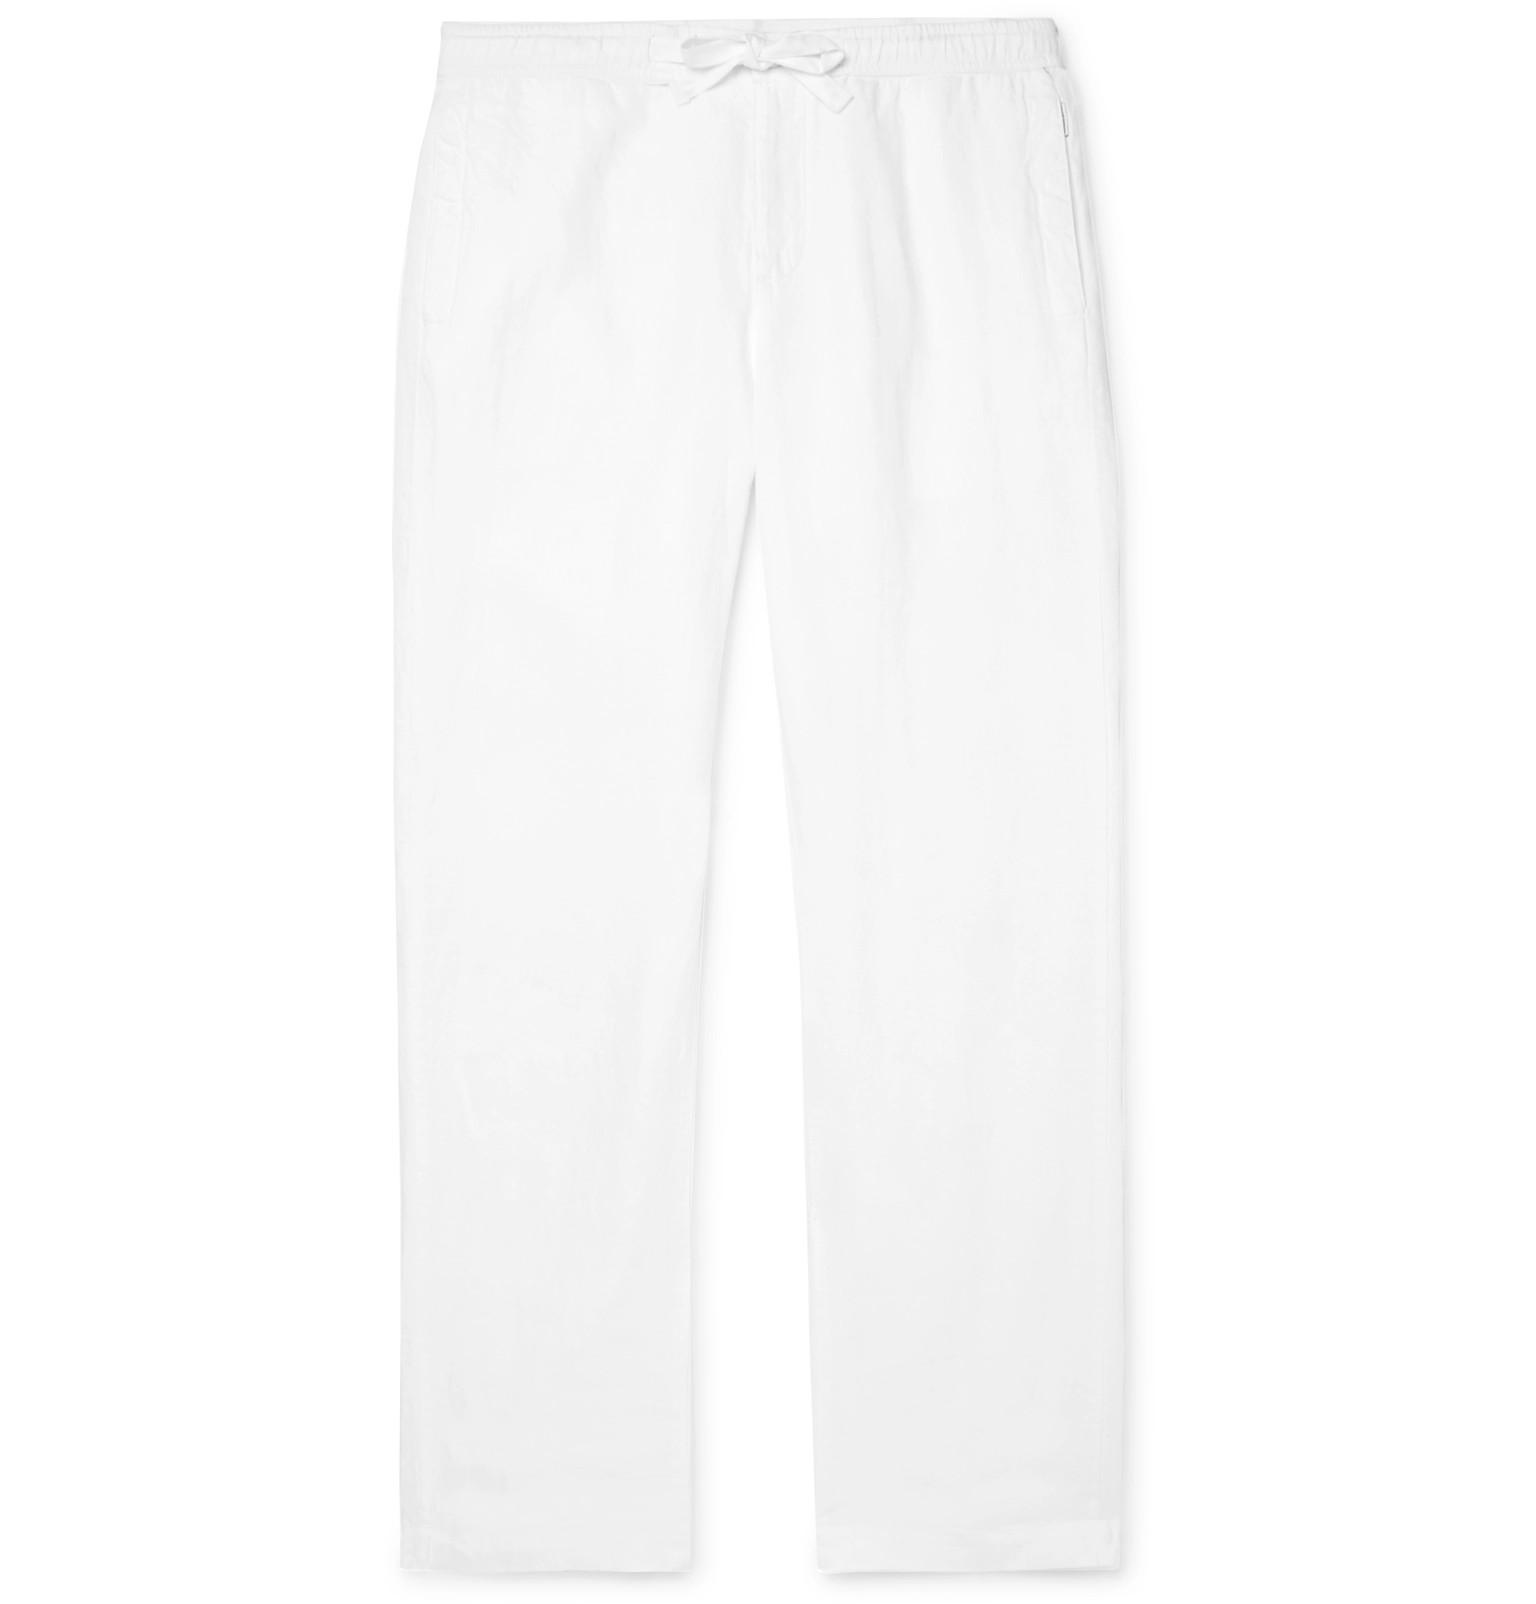 Orlebar Brown Stoneleigh Linen Drawstring Trousers in White for Men - Lyst